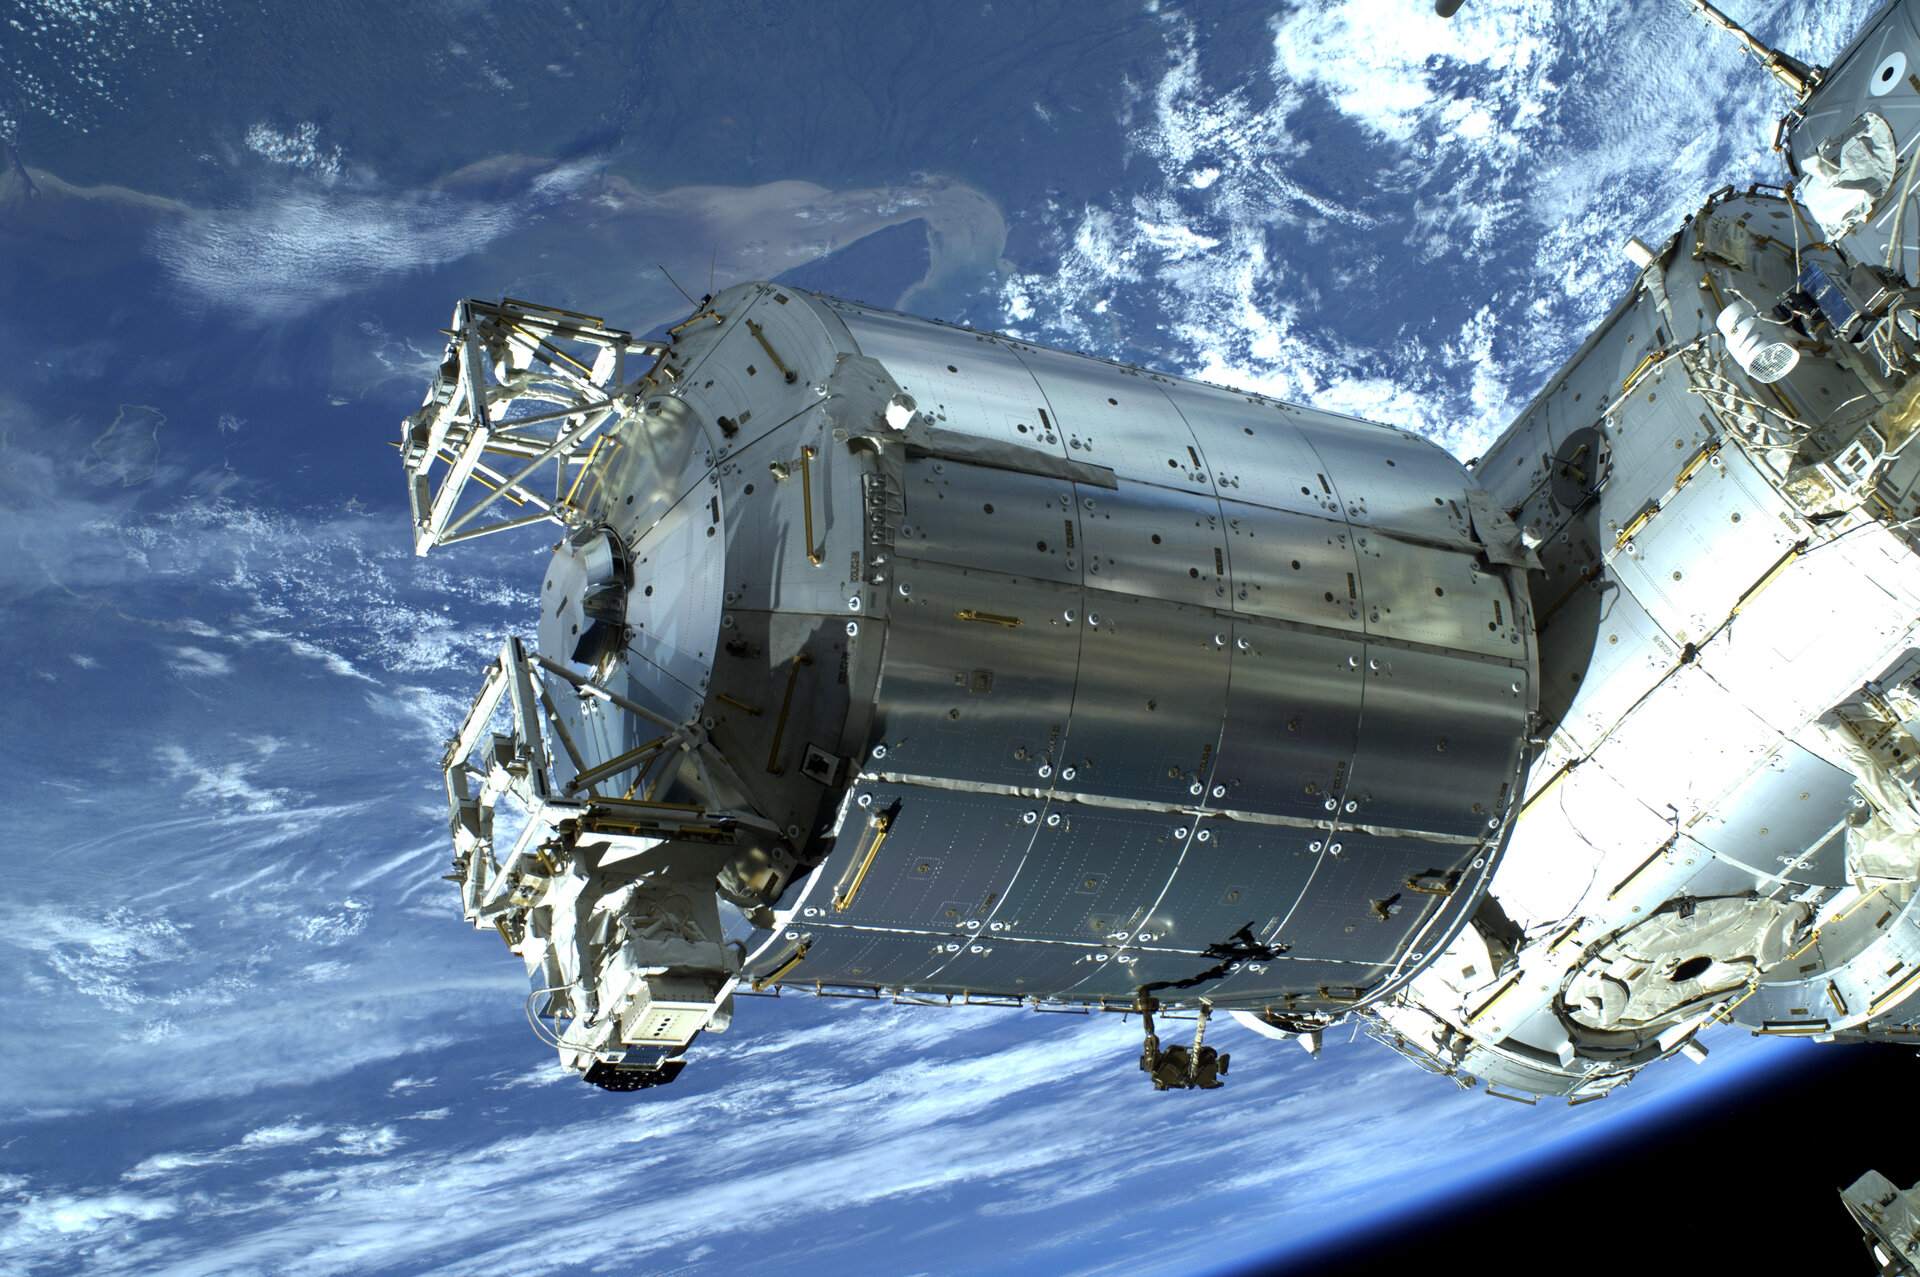 Columbus laboratory, as seen by ESA astronaut Luca Parmitano, July 2013